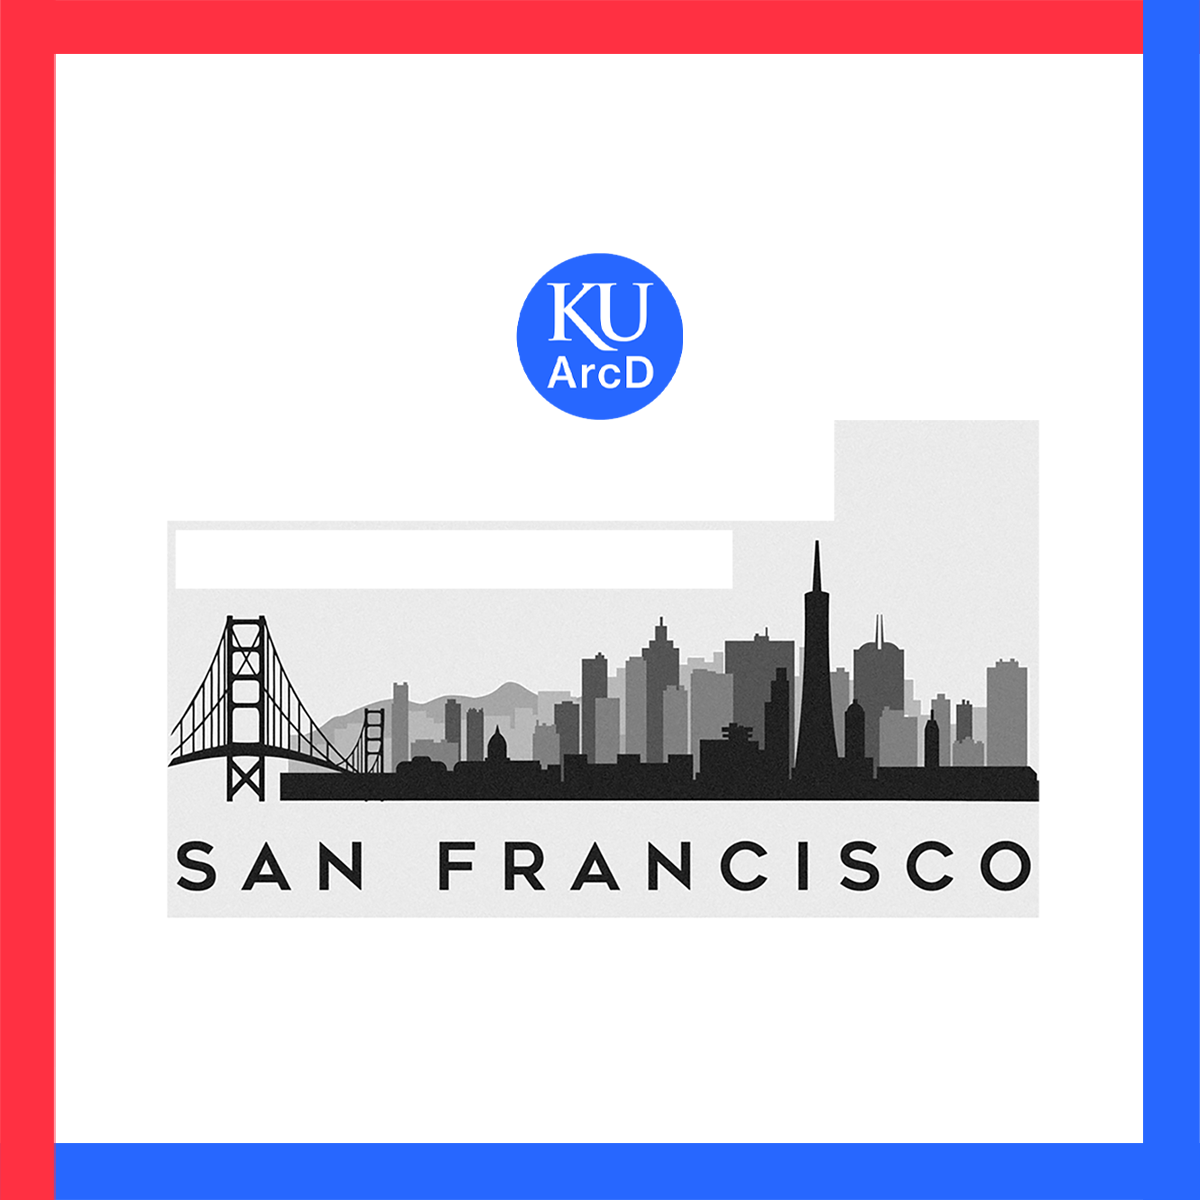 graphic shows blue and white KU ArcD logo above gray illustration of San Francisco skyline. Text reads 'SAN FRANCISCO' under the illustration. 